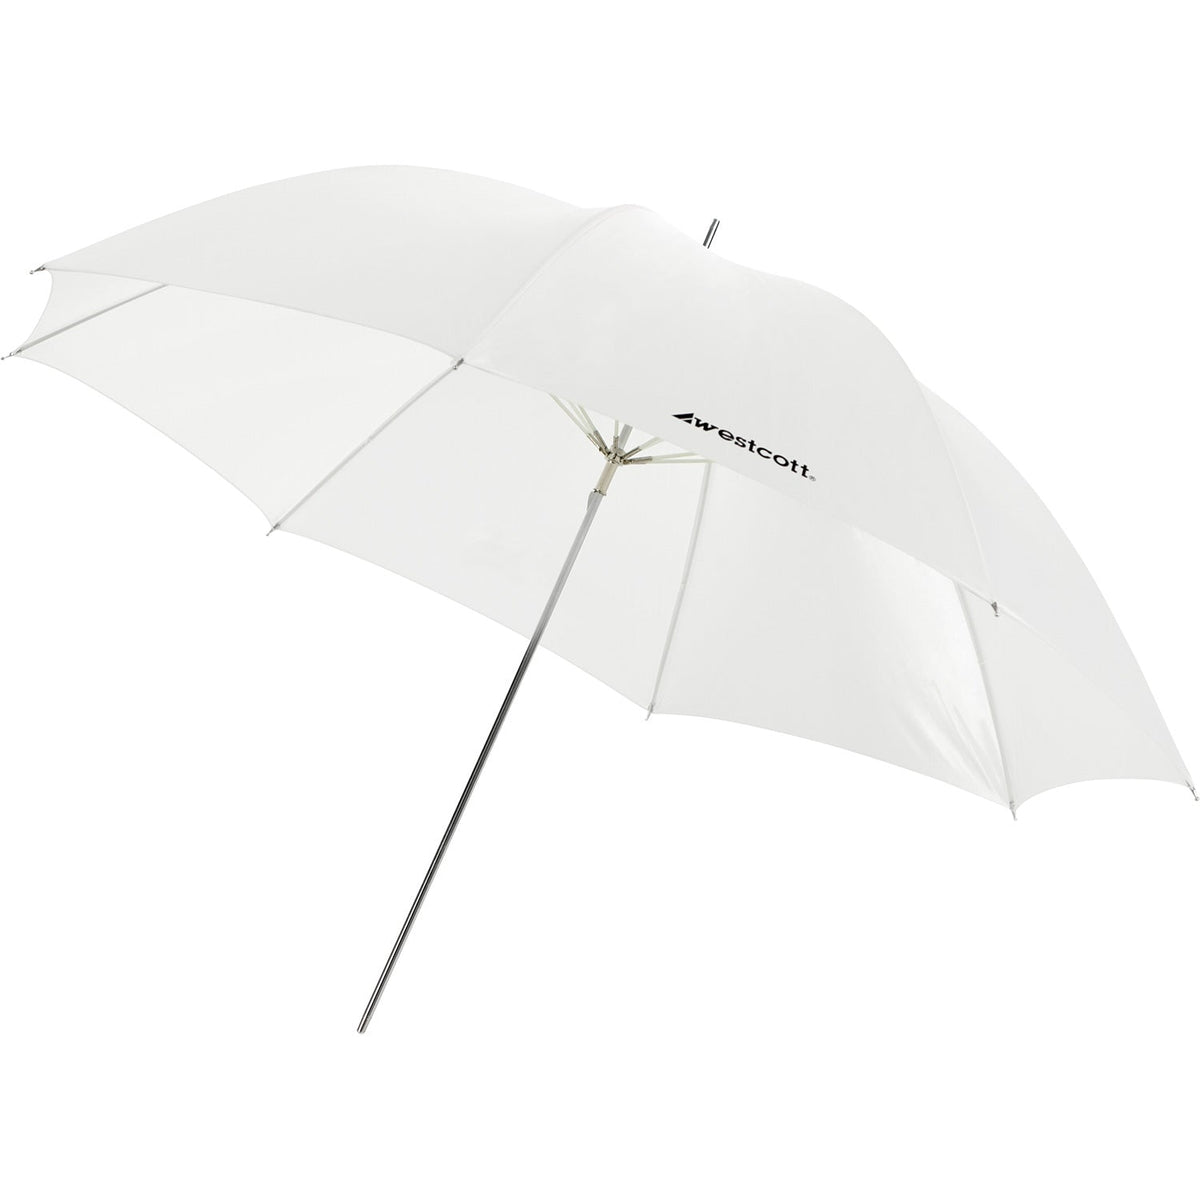 Standard Umbrella - Optical White Satin Diffusion (45")